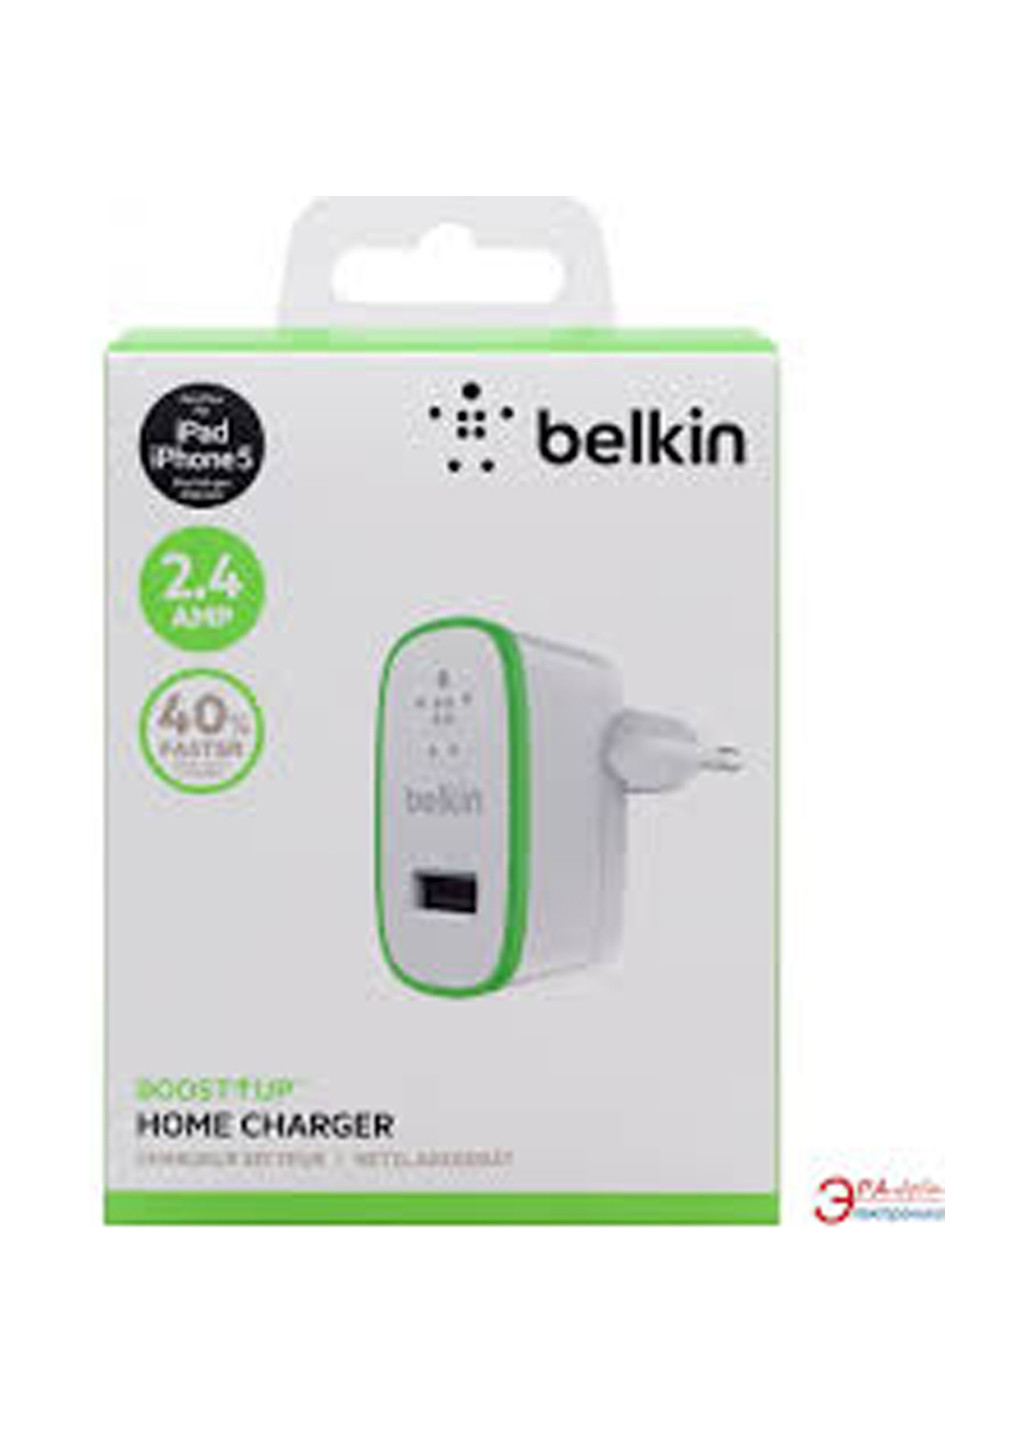 Сетевое ЗУ Belkin usb homecharger (usb 2.4amp), белый (f8j040vfwht) (137882415)